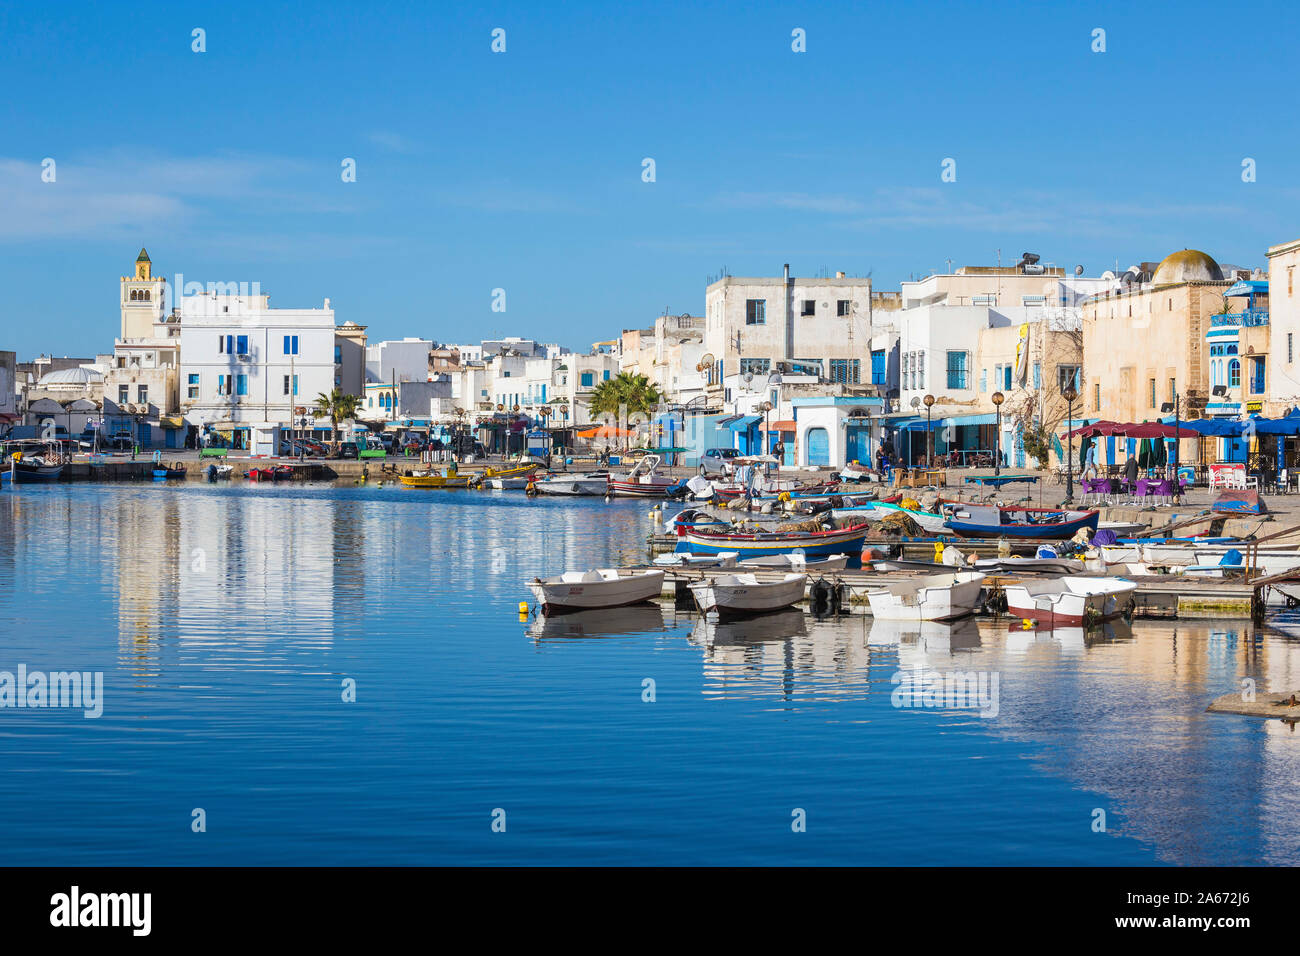 Tunisia, Bizerte, The Old Port Stock Photo